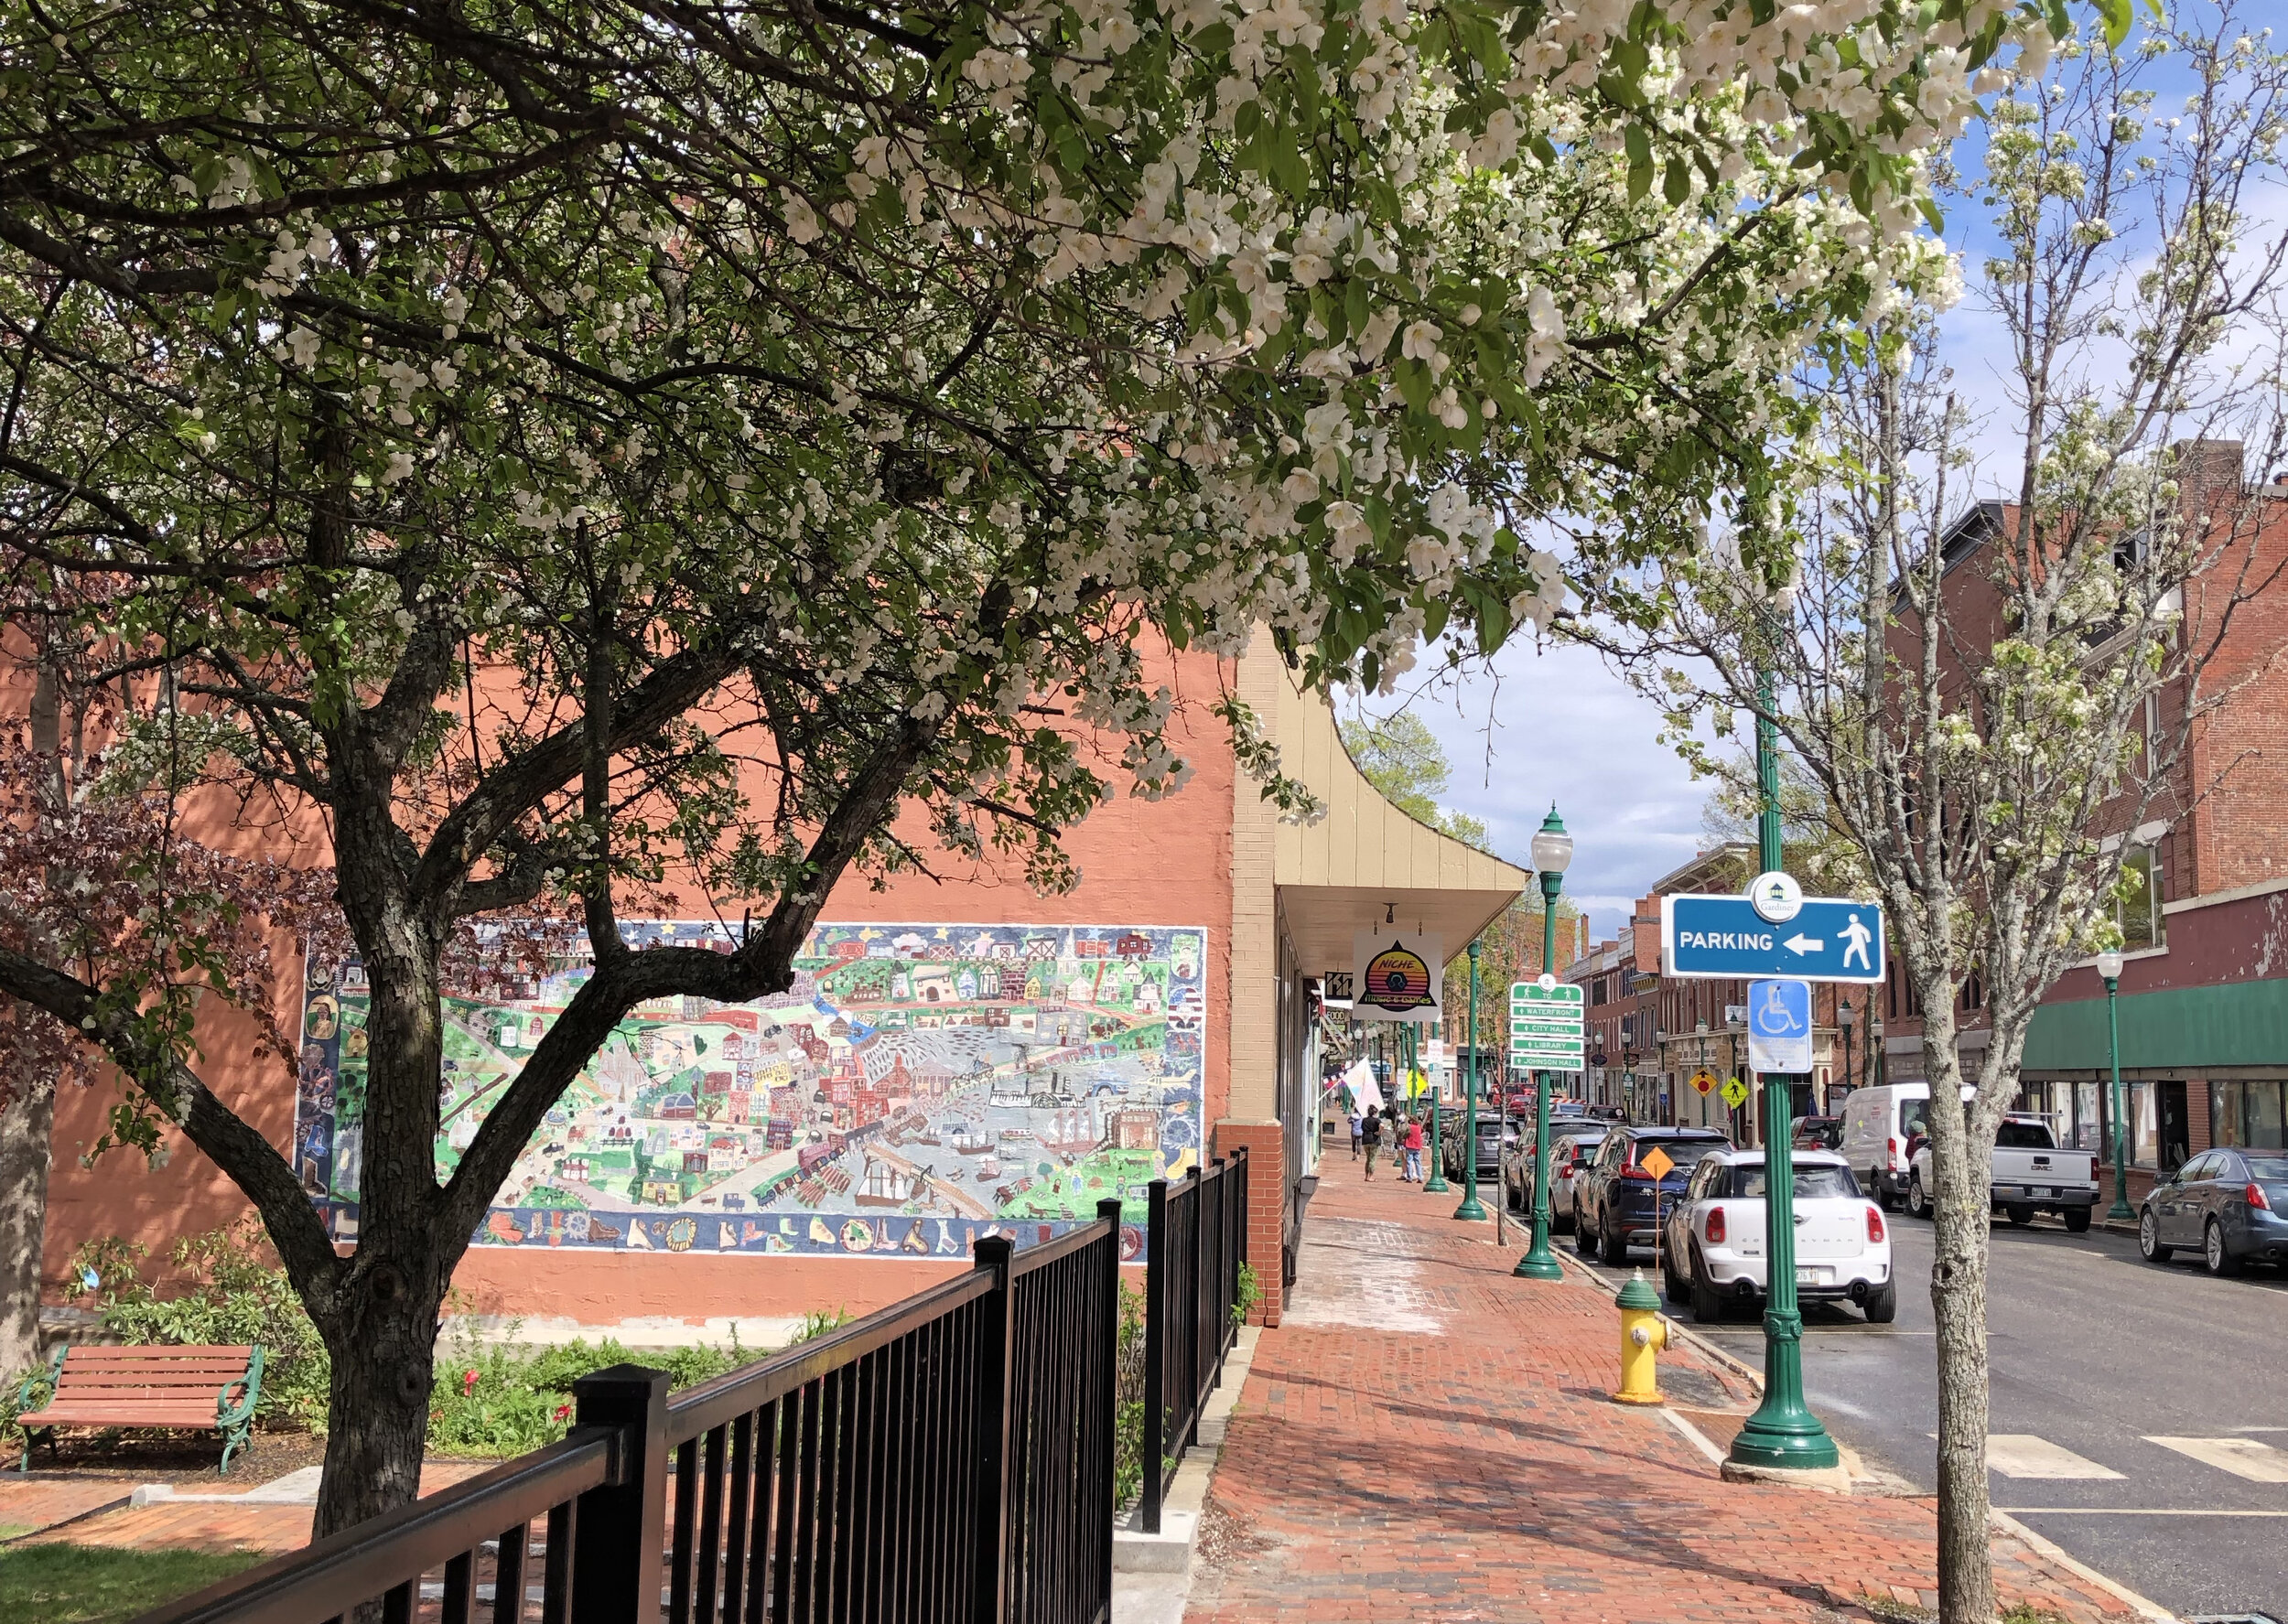  Apple blossoms in Downtown Gardiner, courtesy of Gardiner Main Street.  